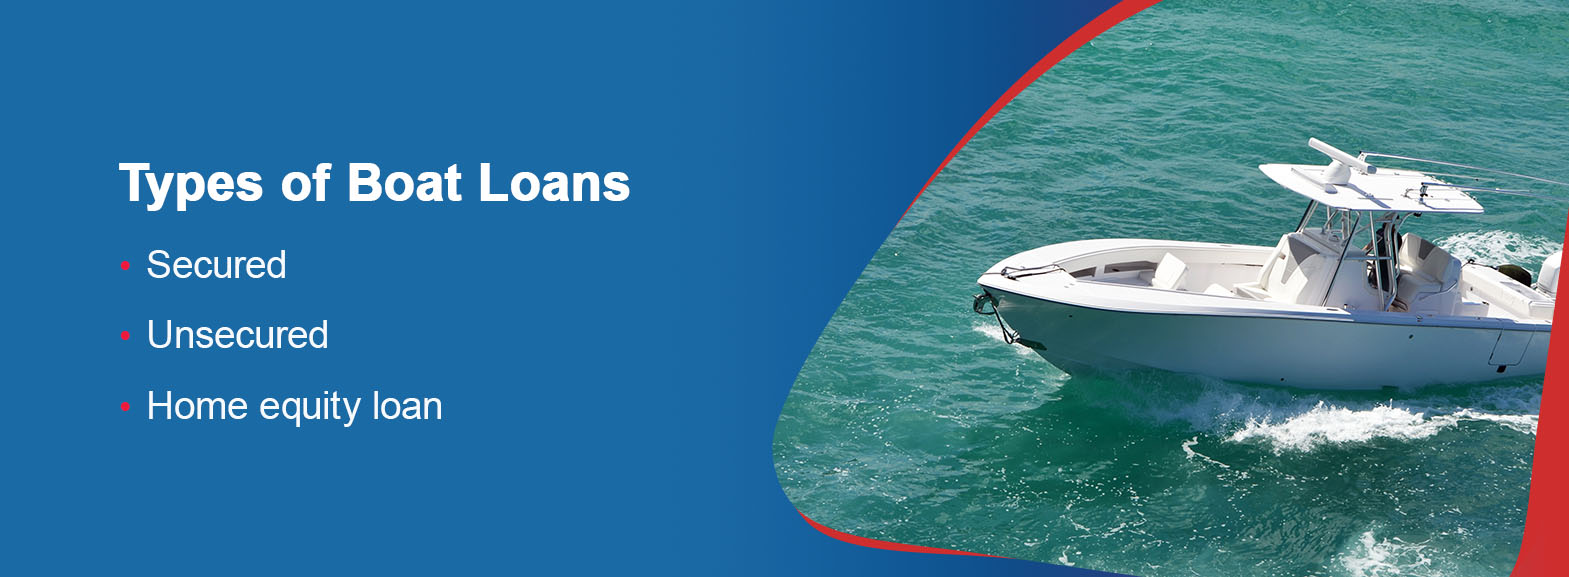 Types of Boat Loans